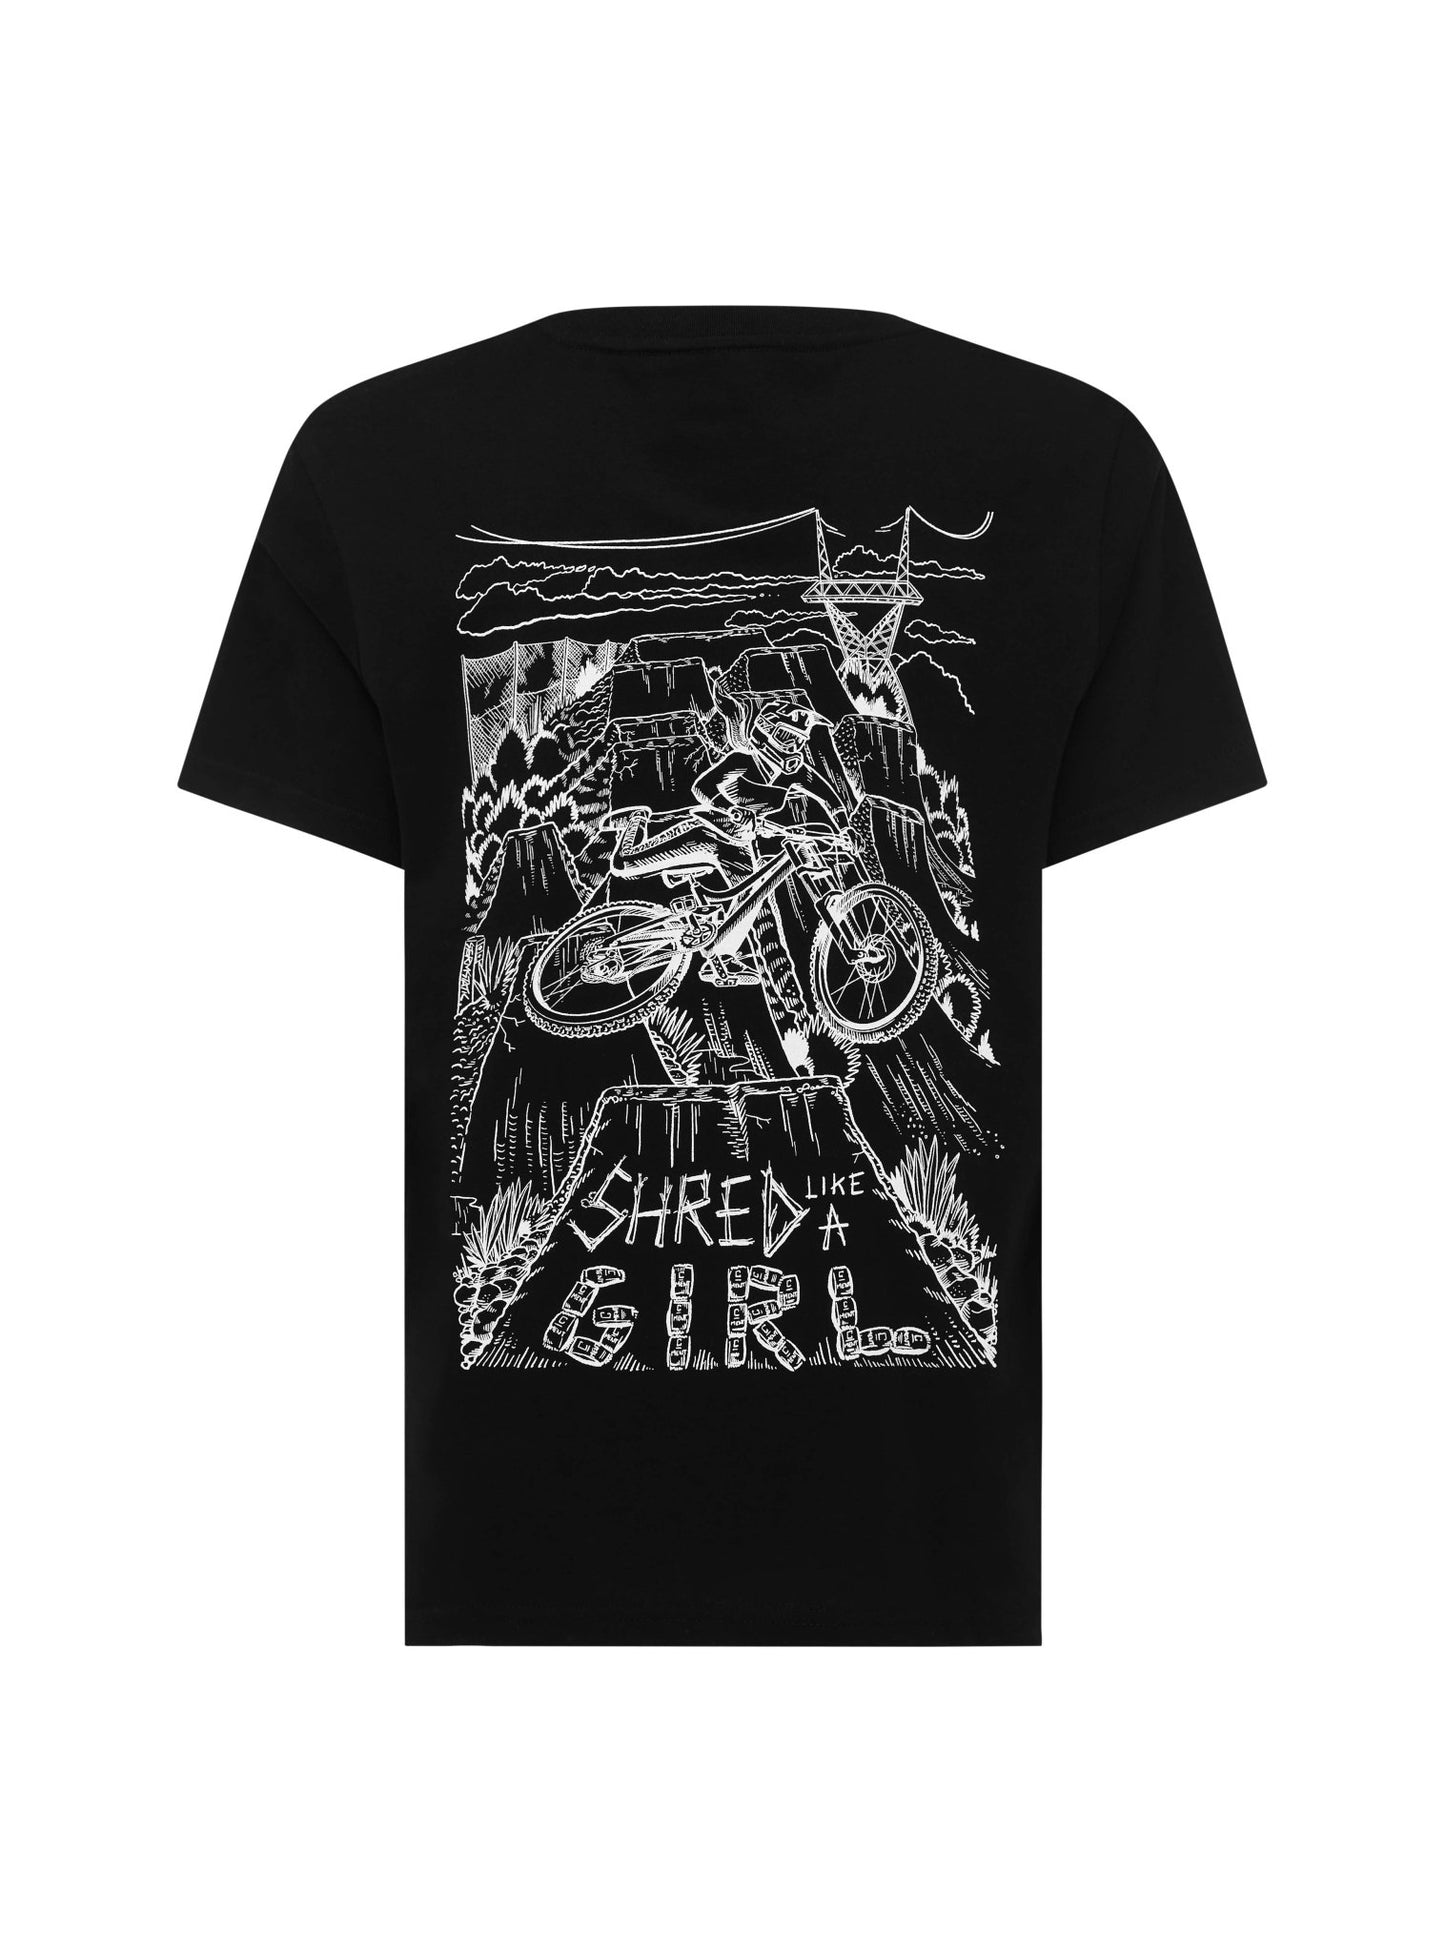 Shred Clothing | Freeride Tee | Black - Shred Like a Girl